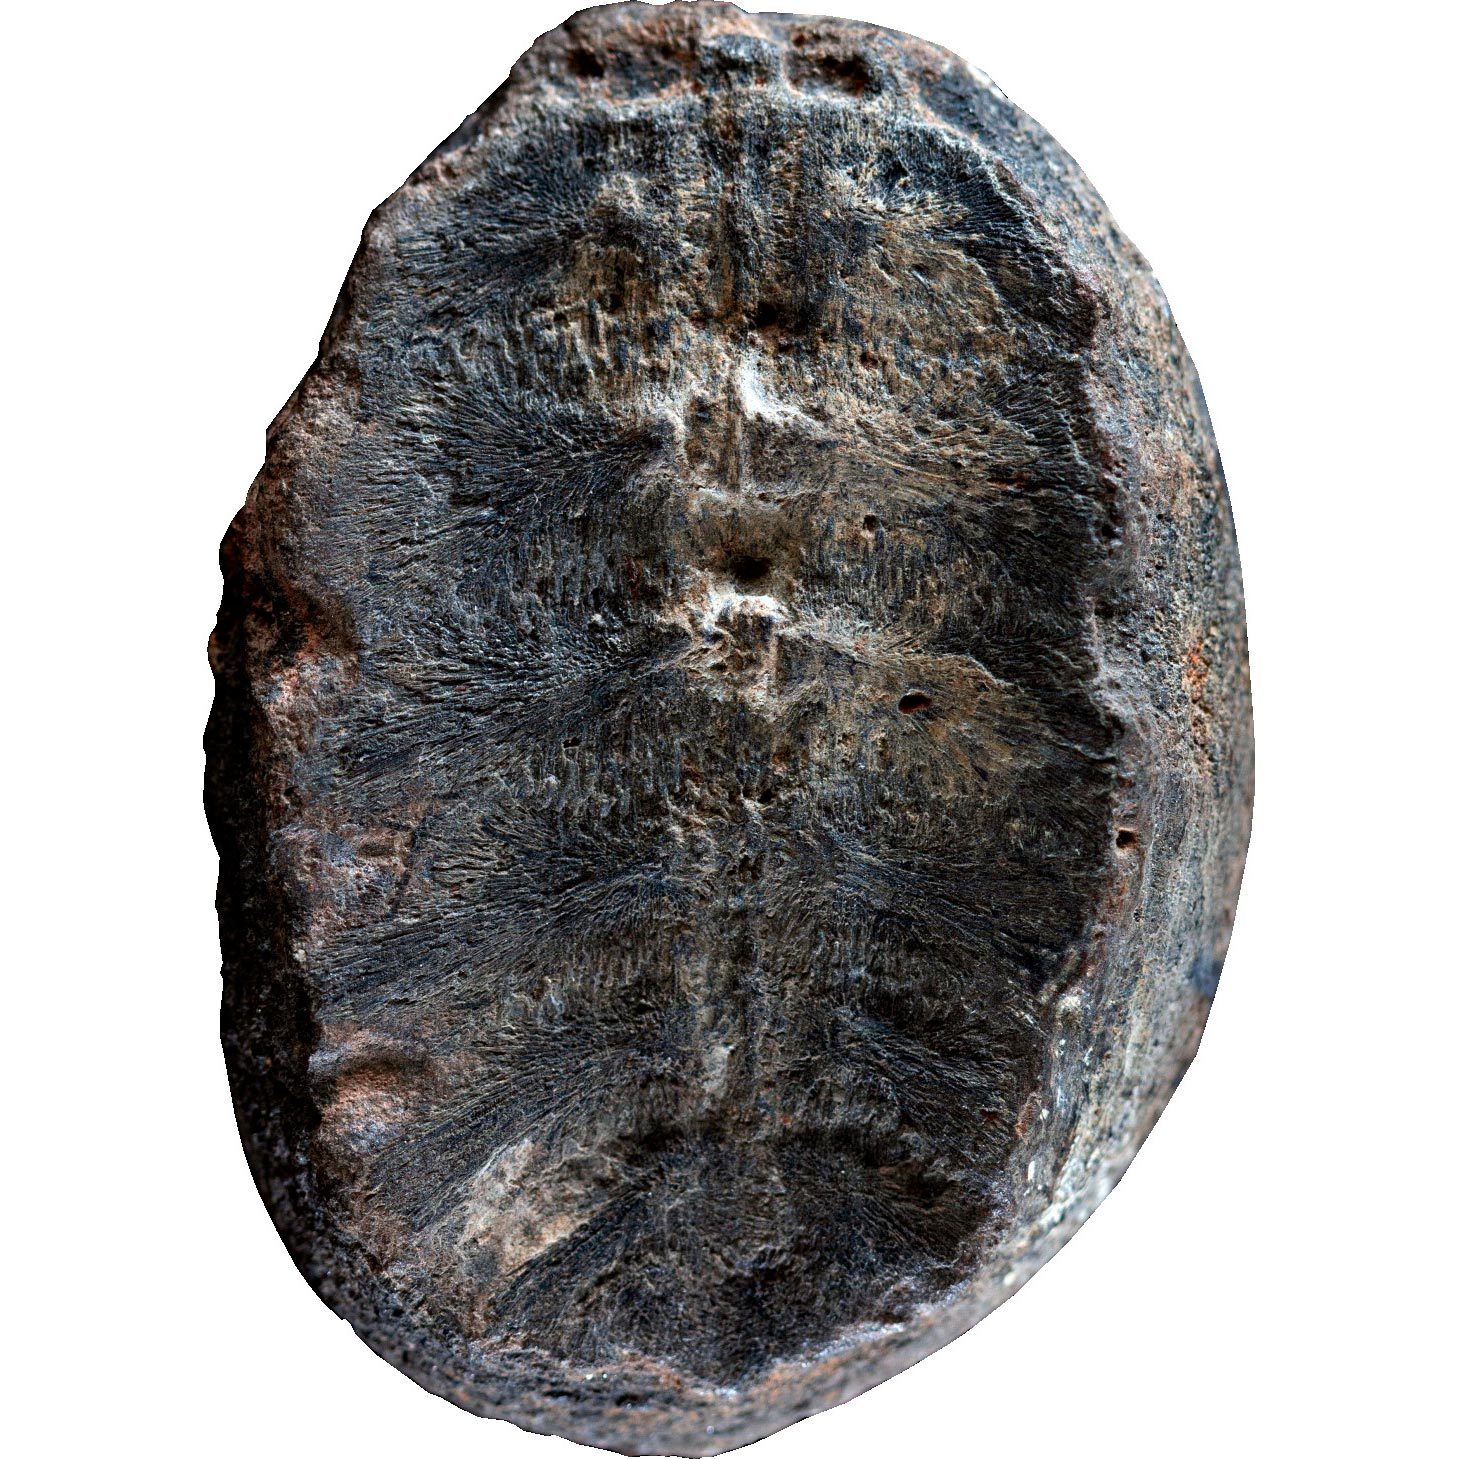 Scoperta una piccola tartaruga travestita da fossile vegetale